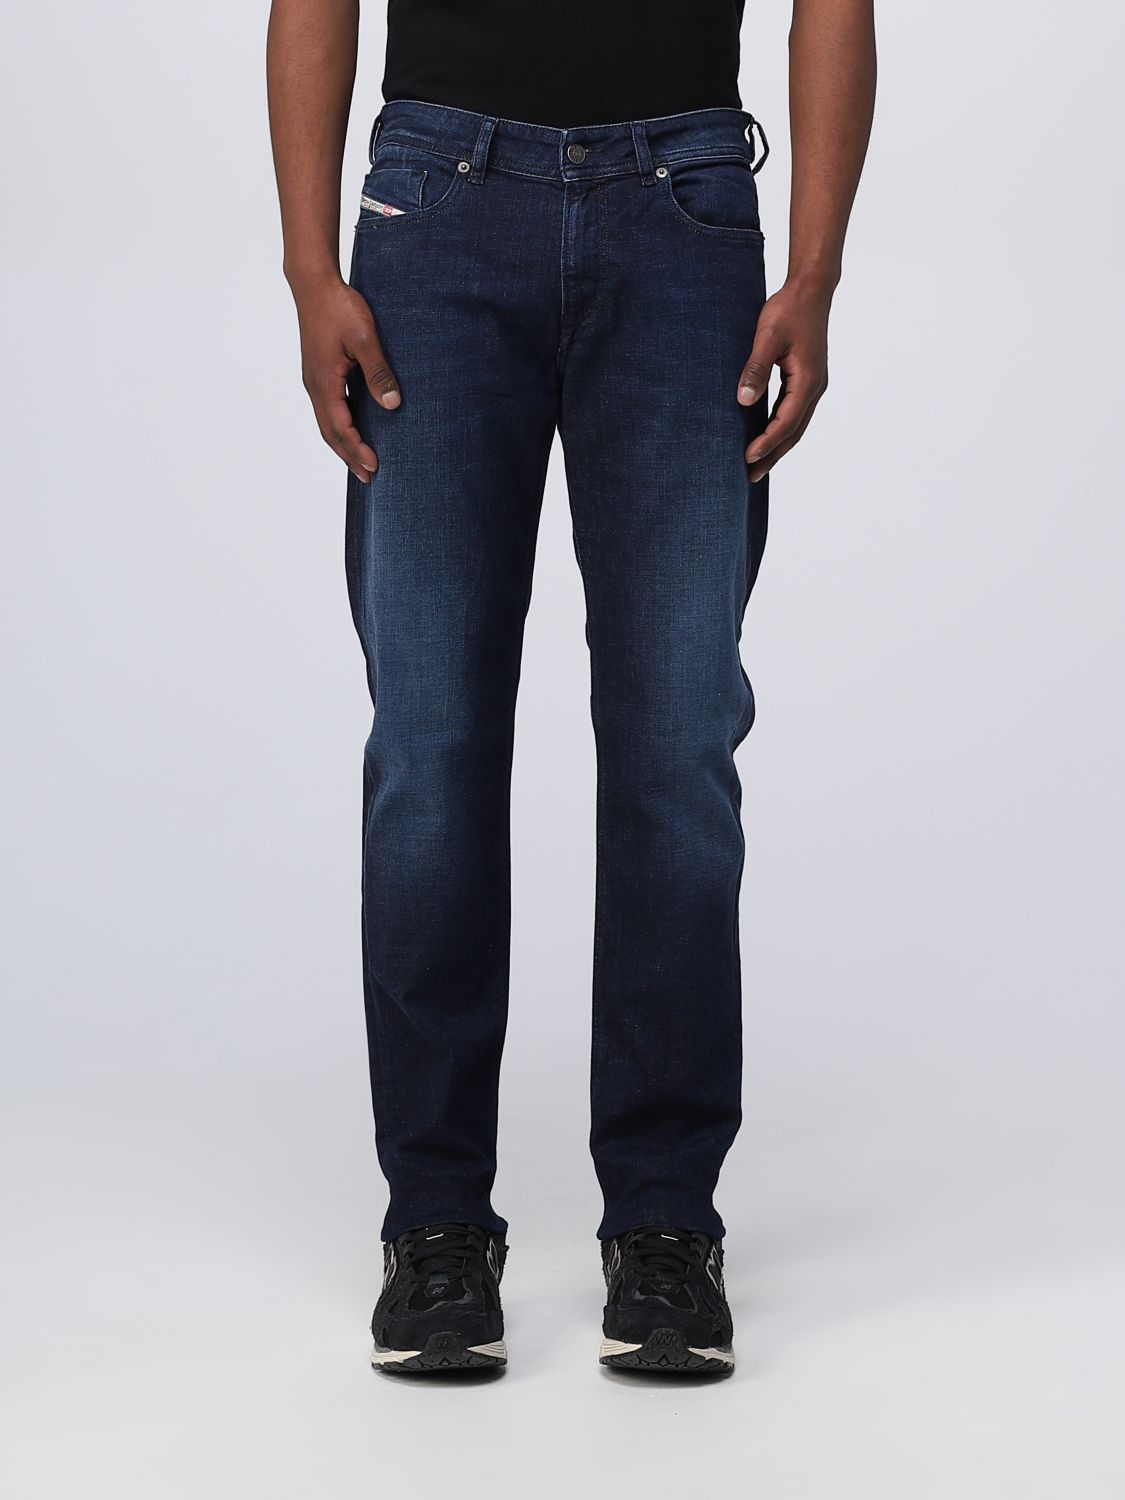 DIESEL: denim jeans - Denim | Diesel jeans A0359409E96 online at